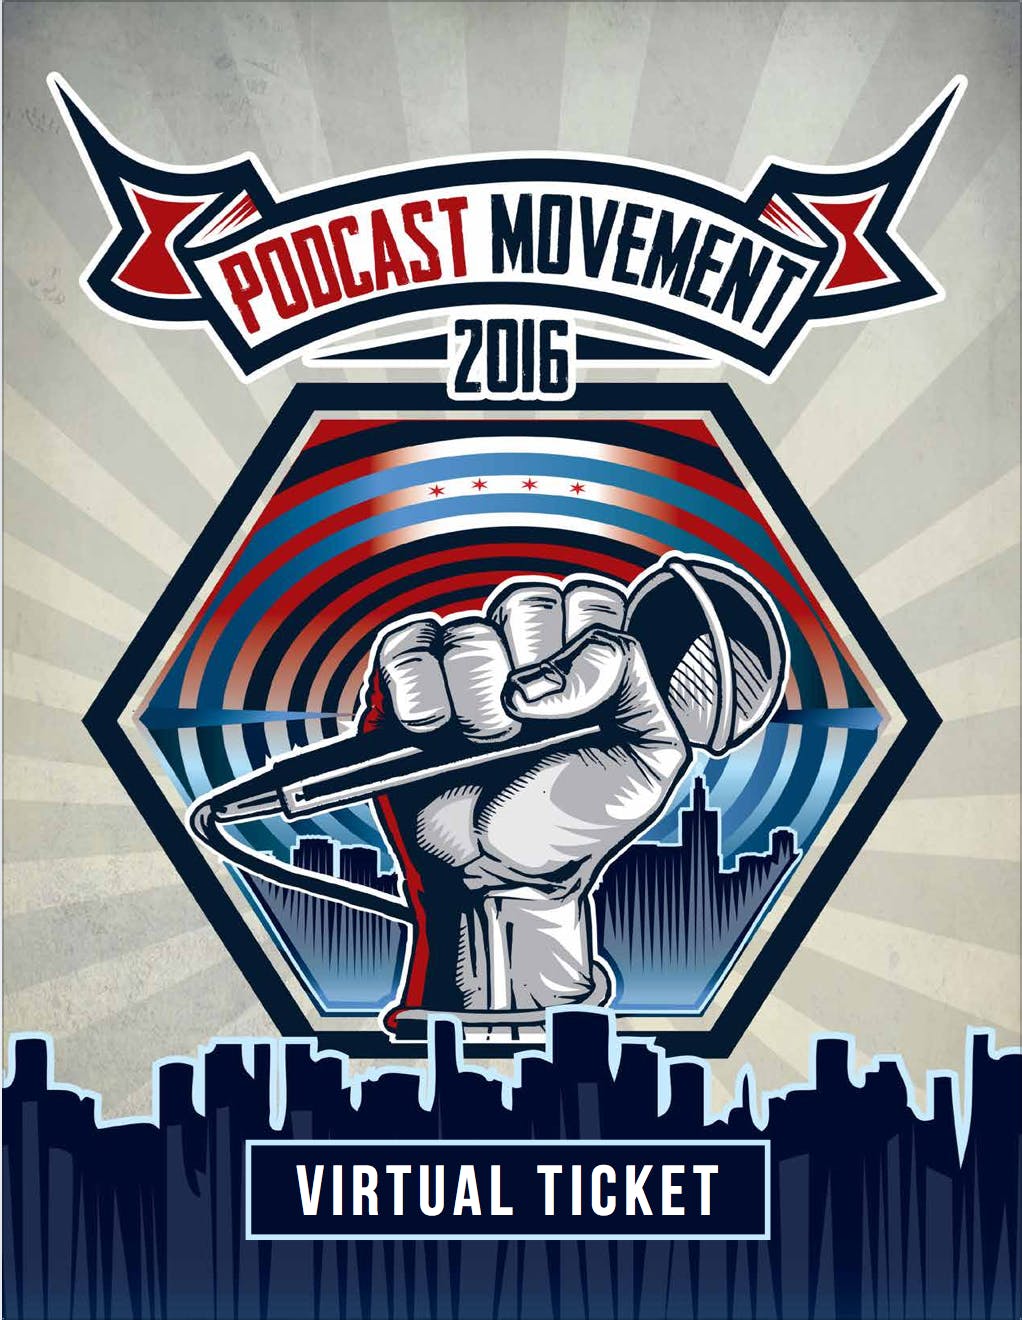 Podcast Movement 2016 Virtual Ticket media 1